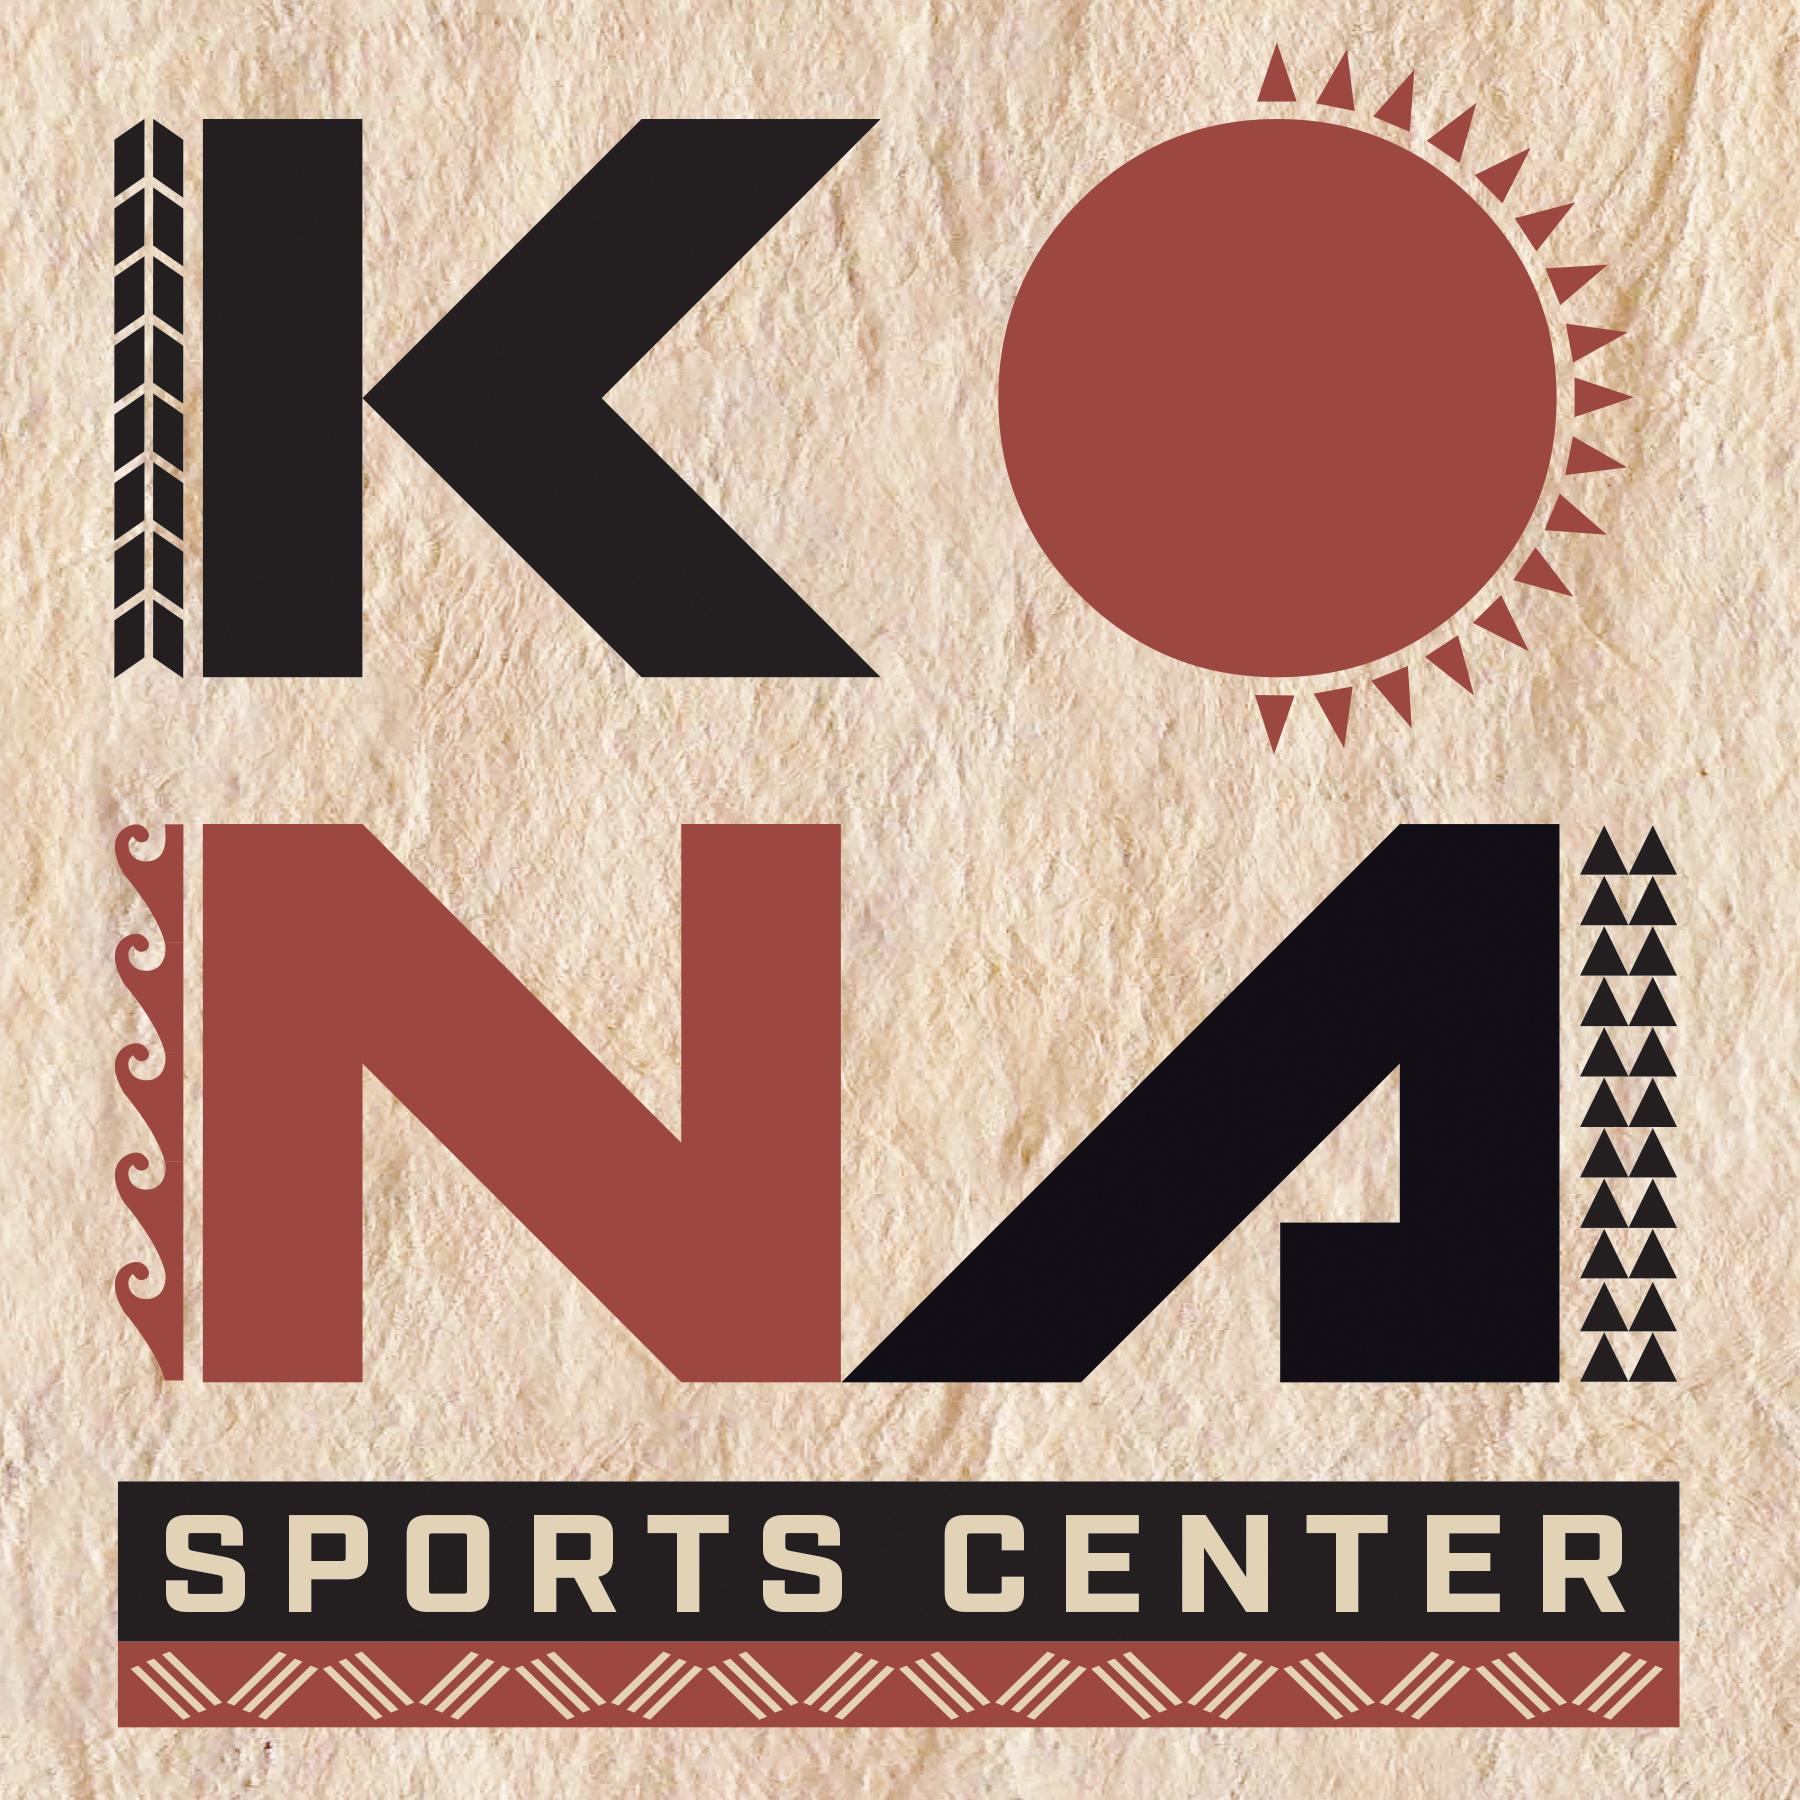 Kona Sports Center